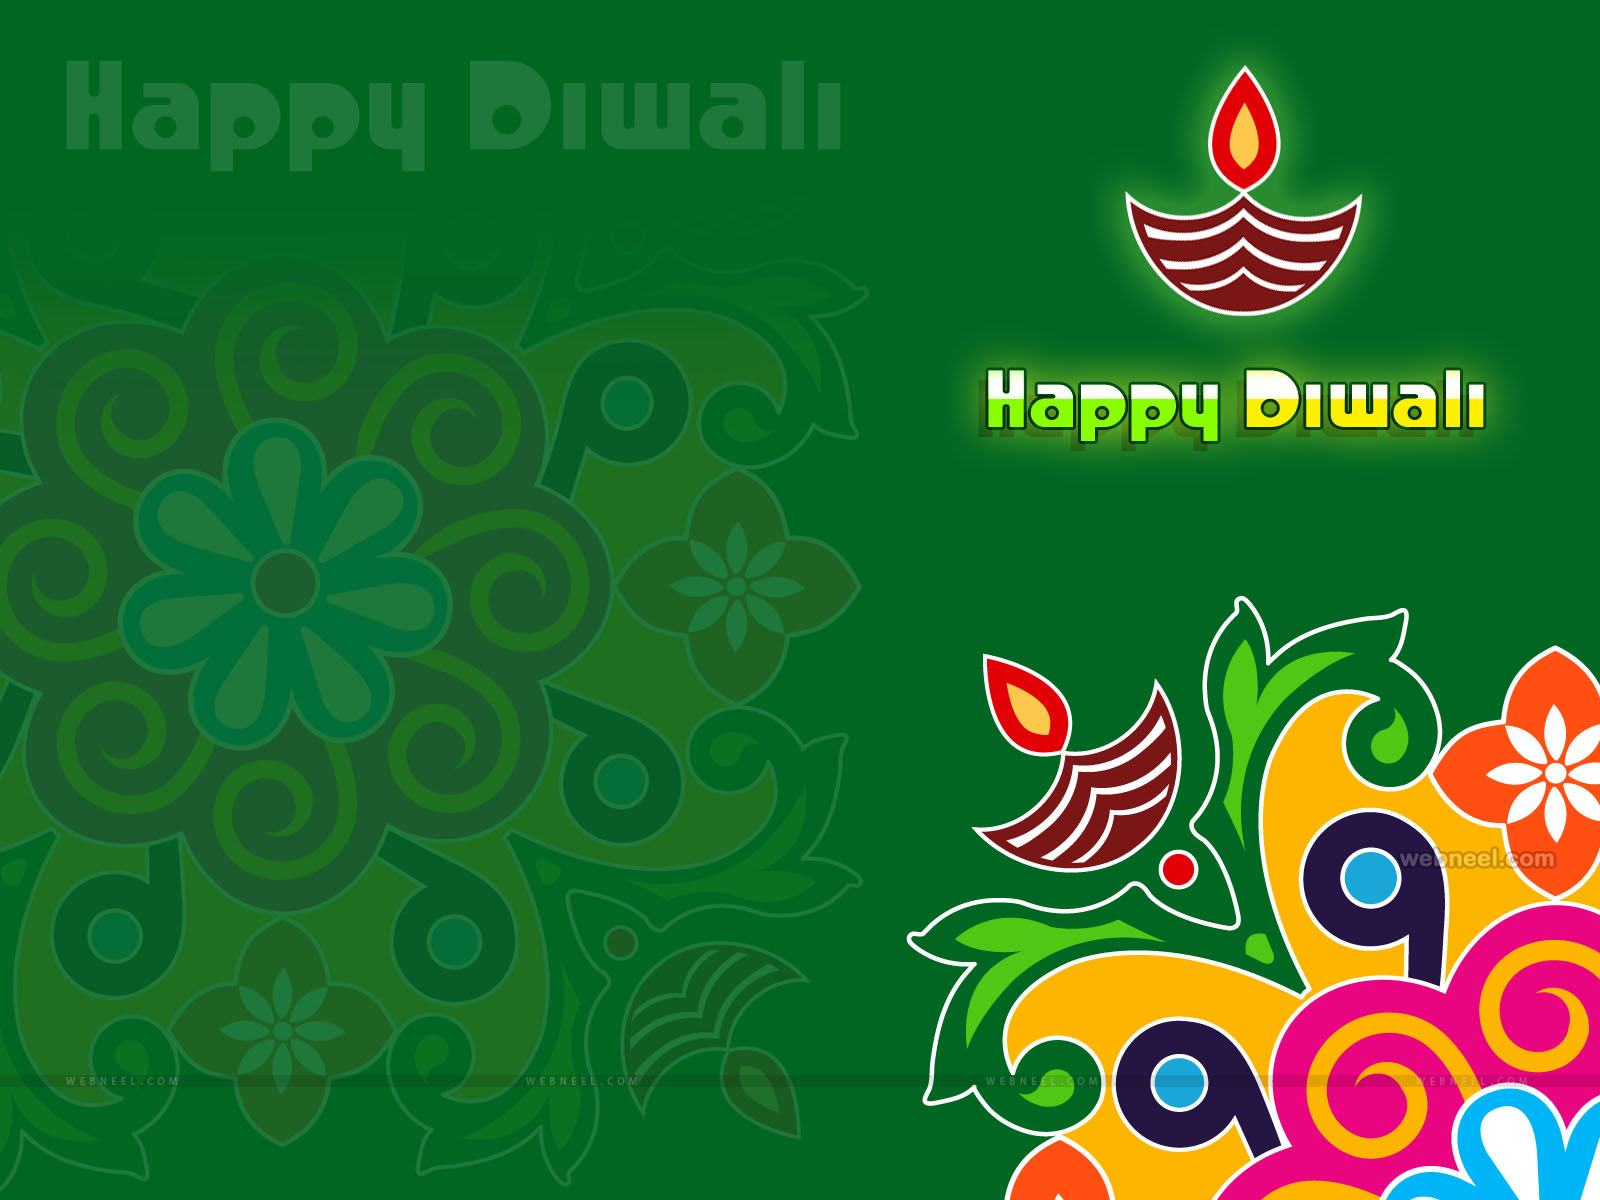 Happy Diwali Wallpaper Of 2018 For Pc & Mobiles - Diwali Wallpaper 2018 , HD Wallpaper & Backgrounds